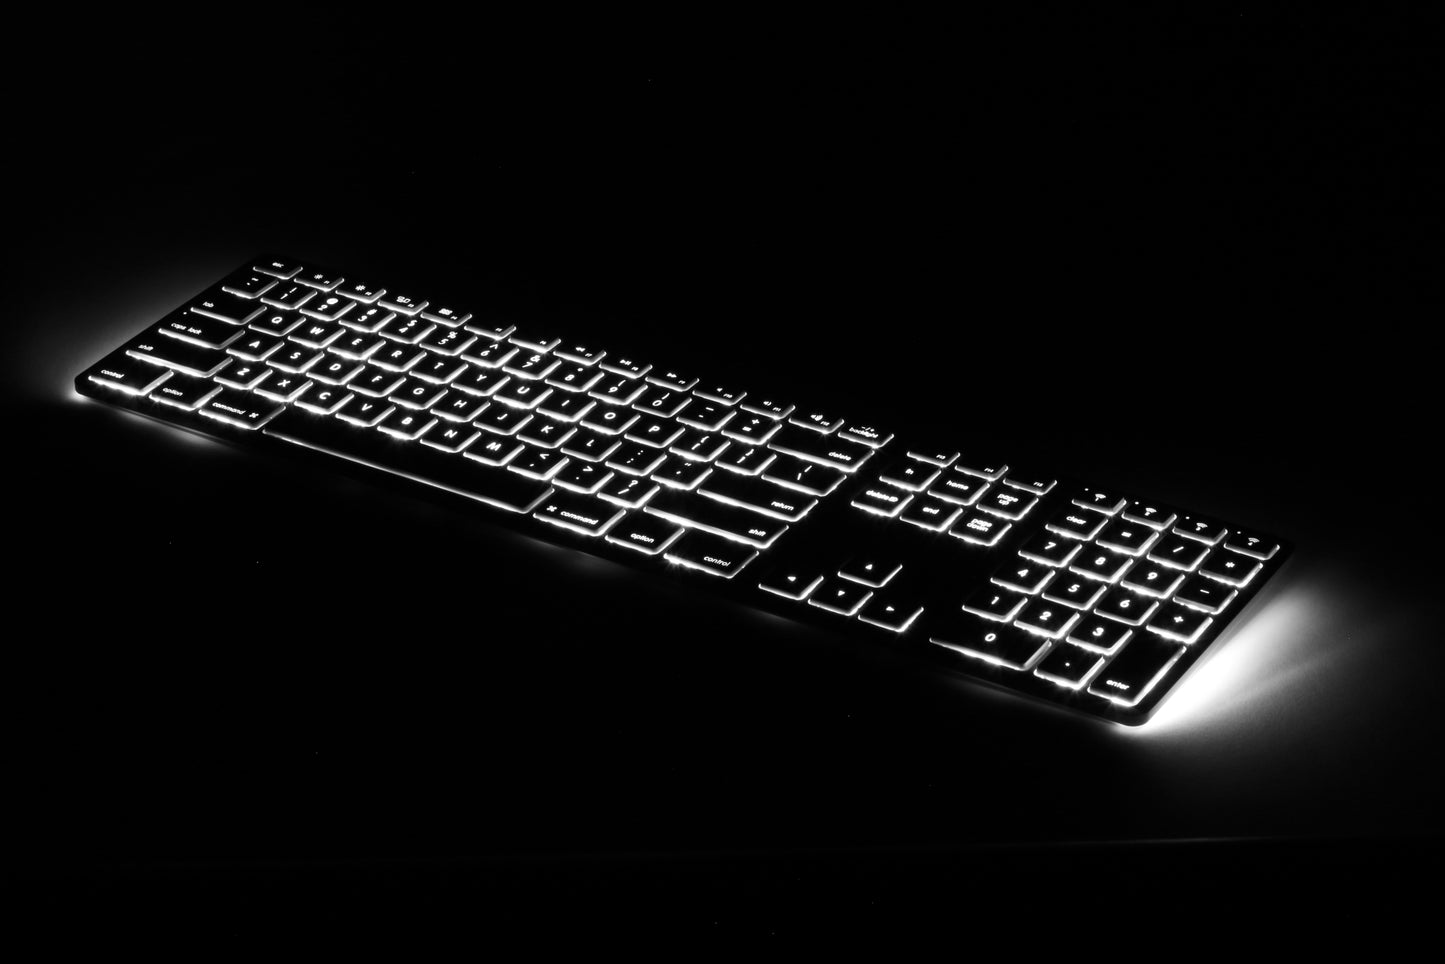 REFURBISHED Backlit Wireless Aluminum Keyboard - Silver